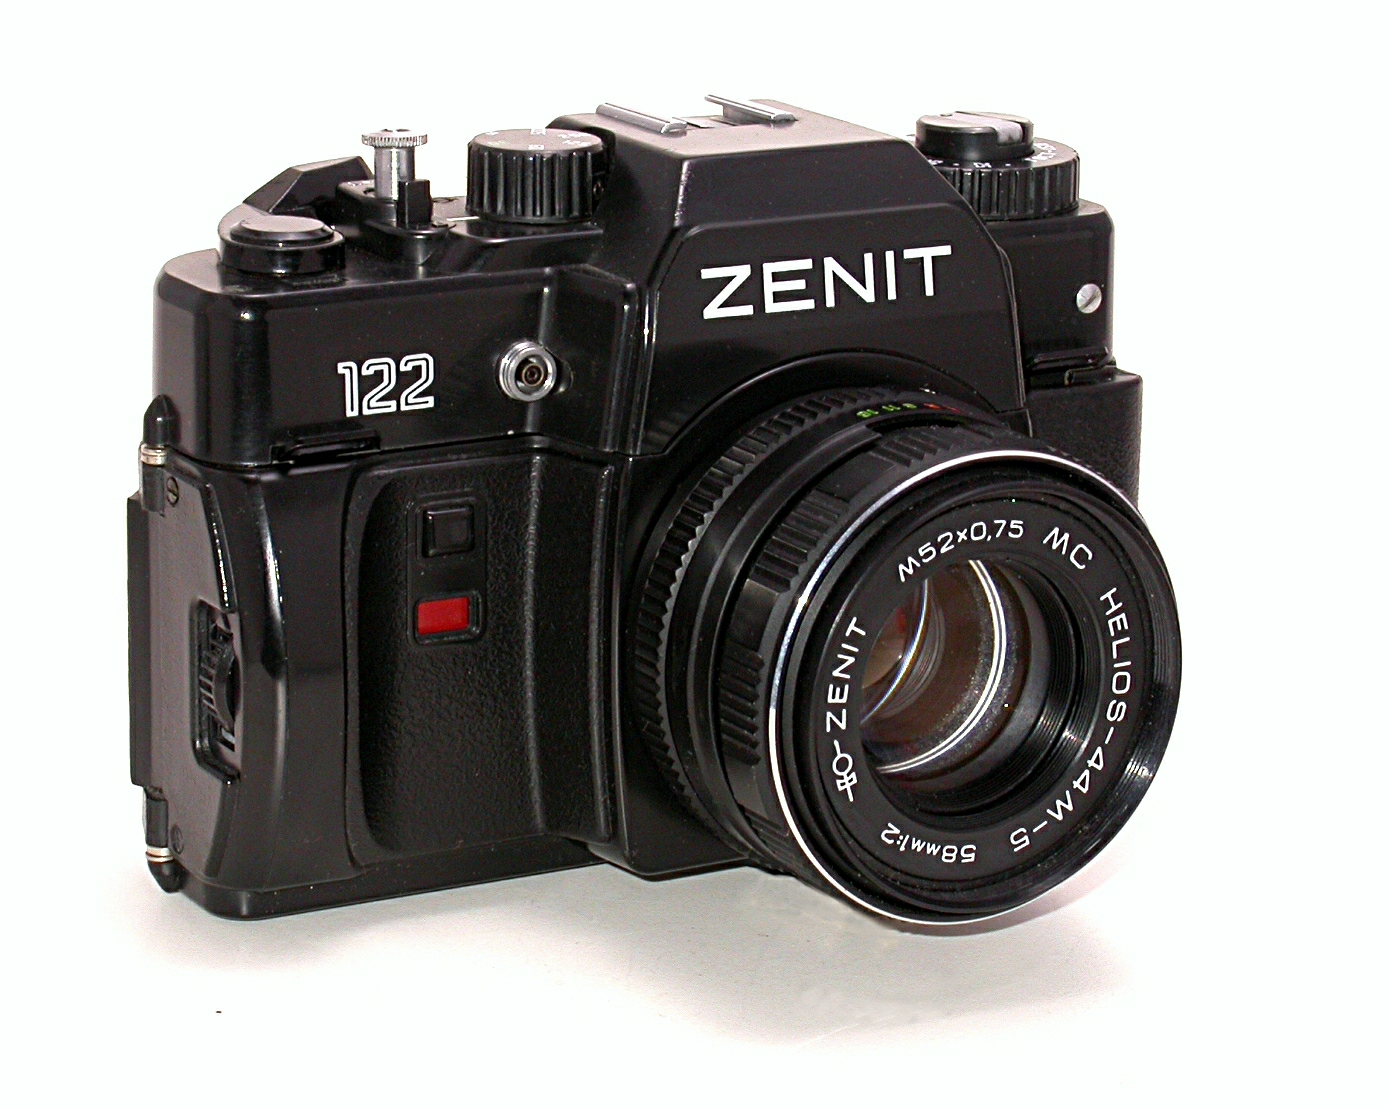 Zenit-122 (Pic: John Nuttall/Flickr)